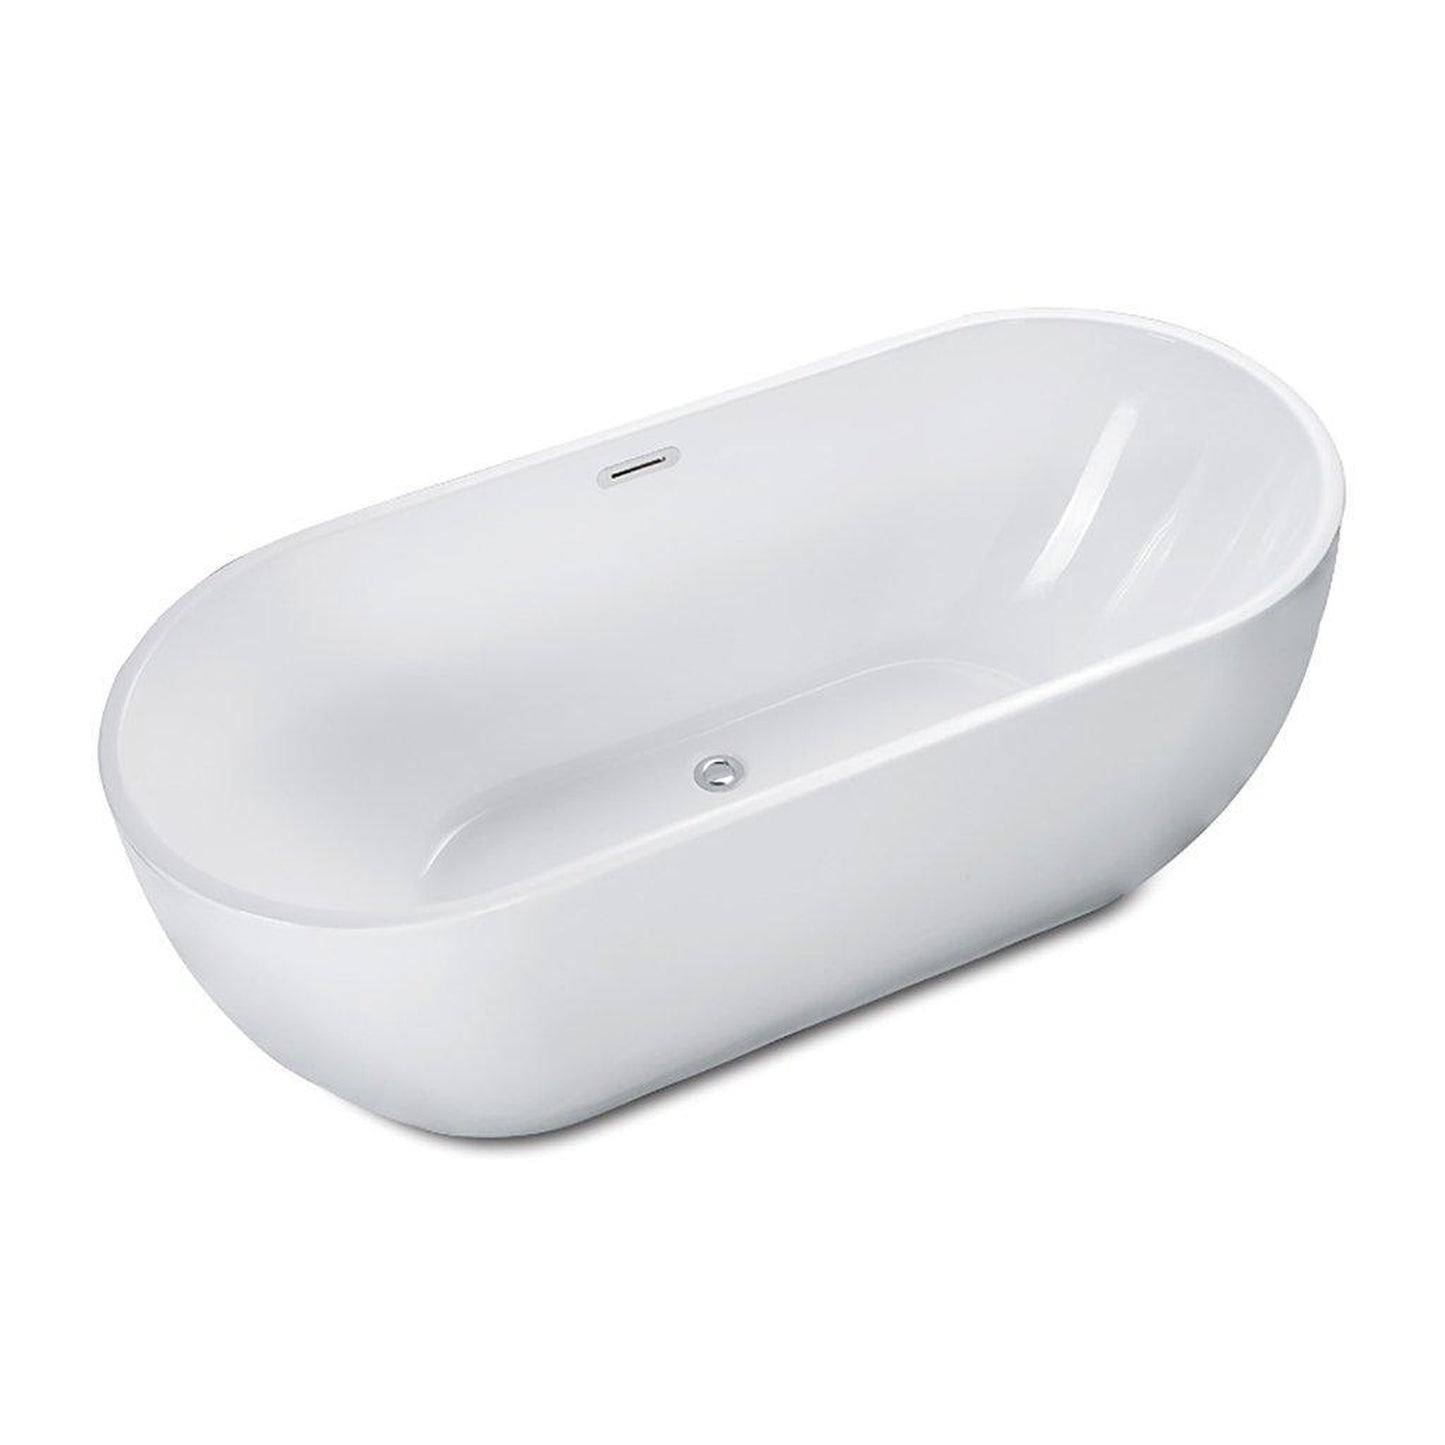 ALFI Brand AB8839 67" One Person Freestanding White Oval Acrylic Soaking Bathtub